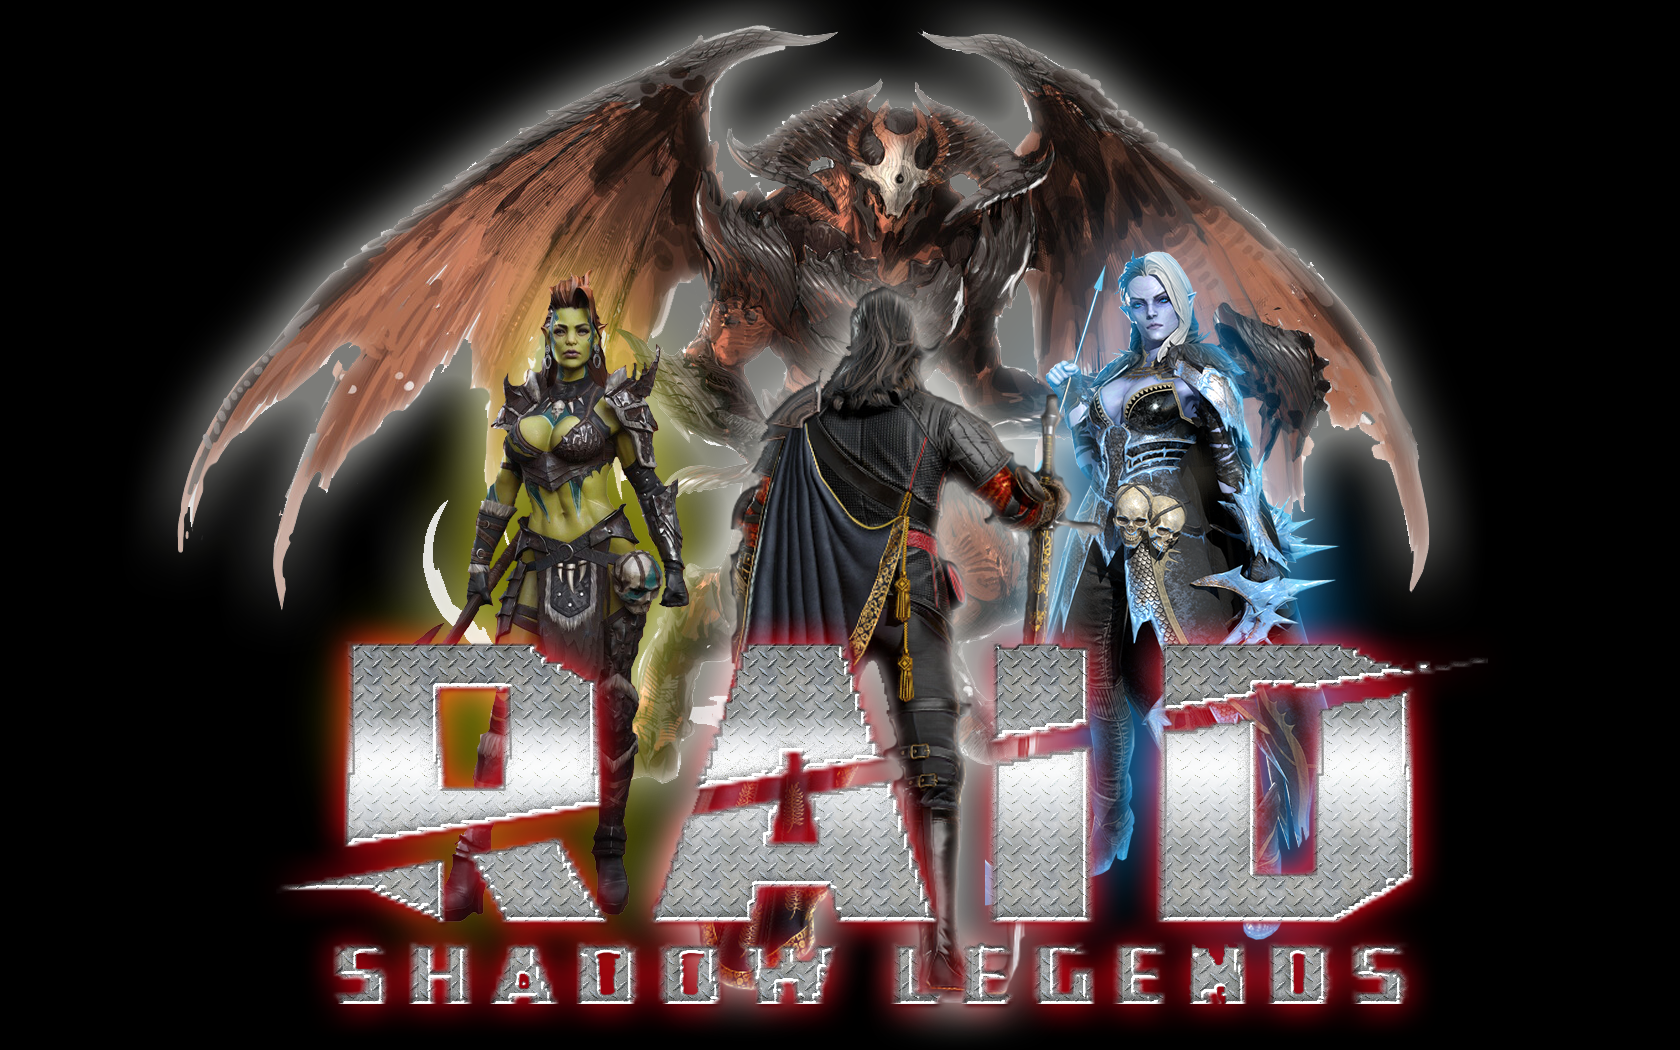 athel build raid shadow legends